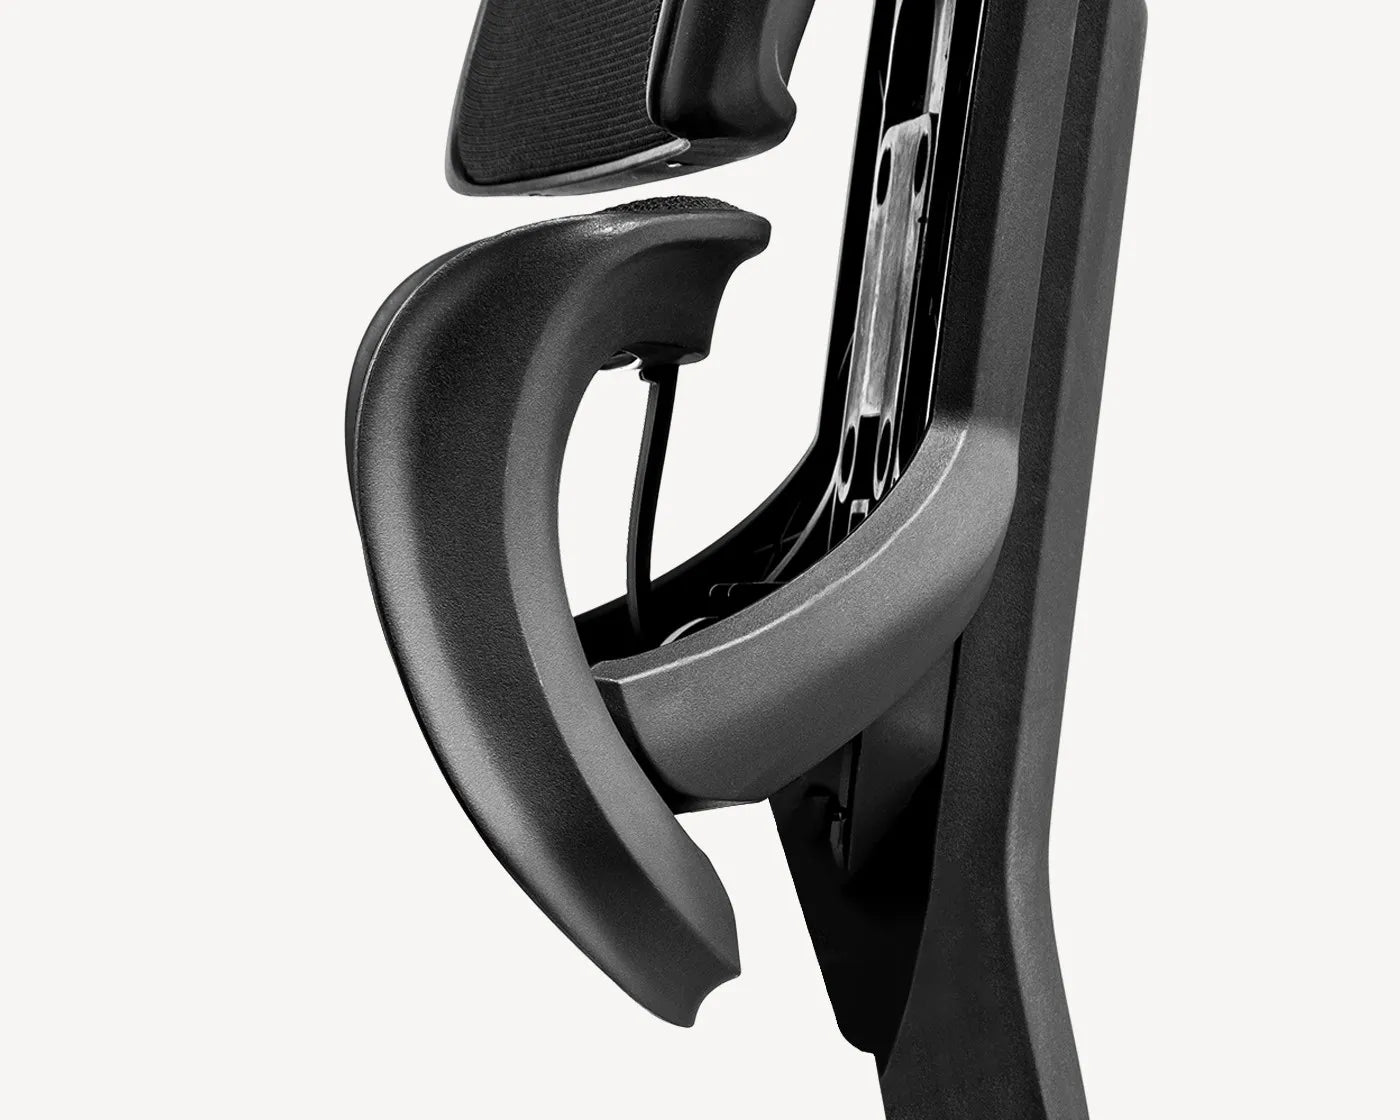 Detail of Flujo chair's Vertebrae Assist armrest, designed for adaptive support and user comfort.